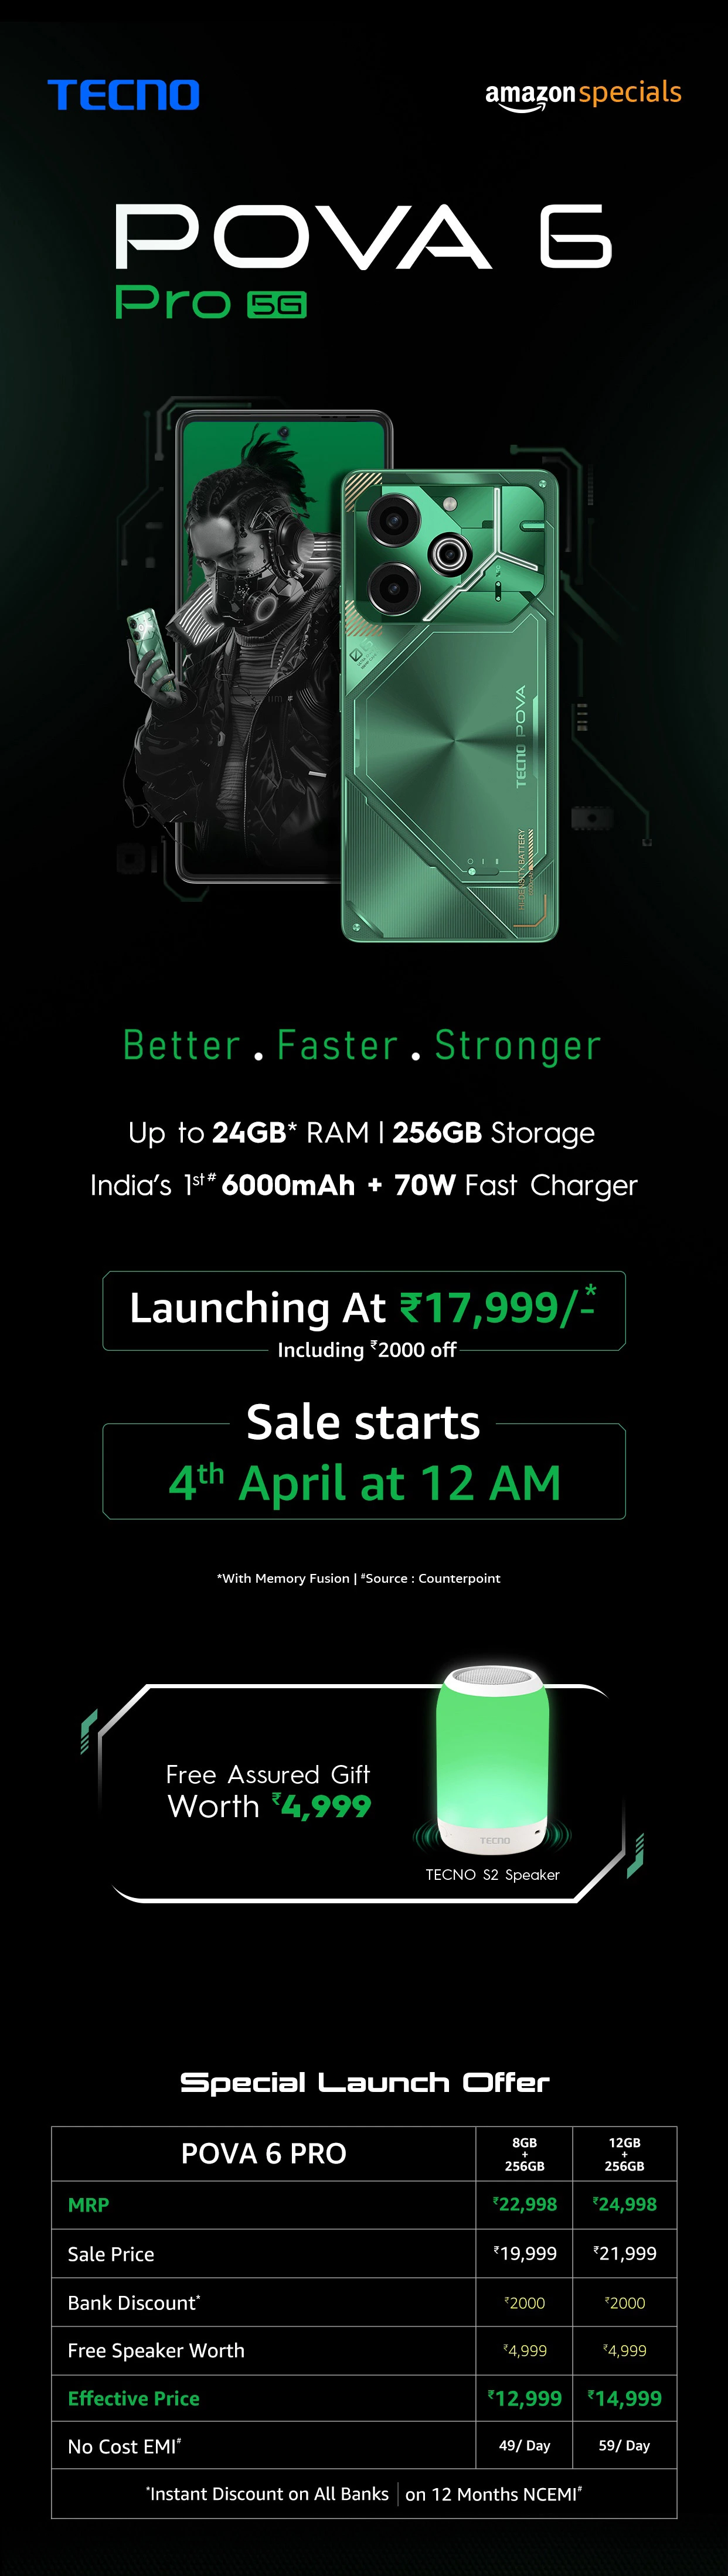 Better faster stronger 24 GB RAM 256 GB storage